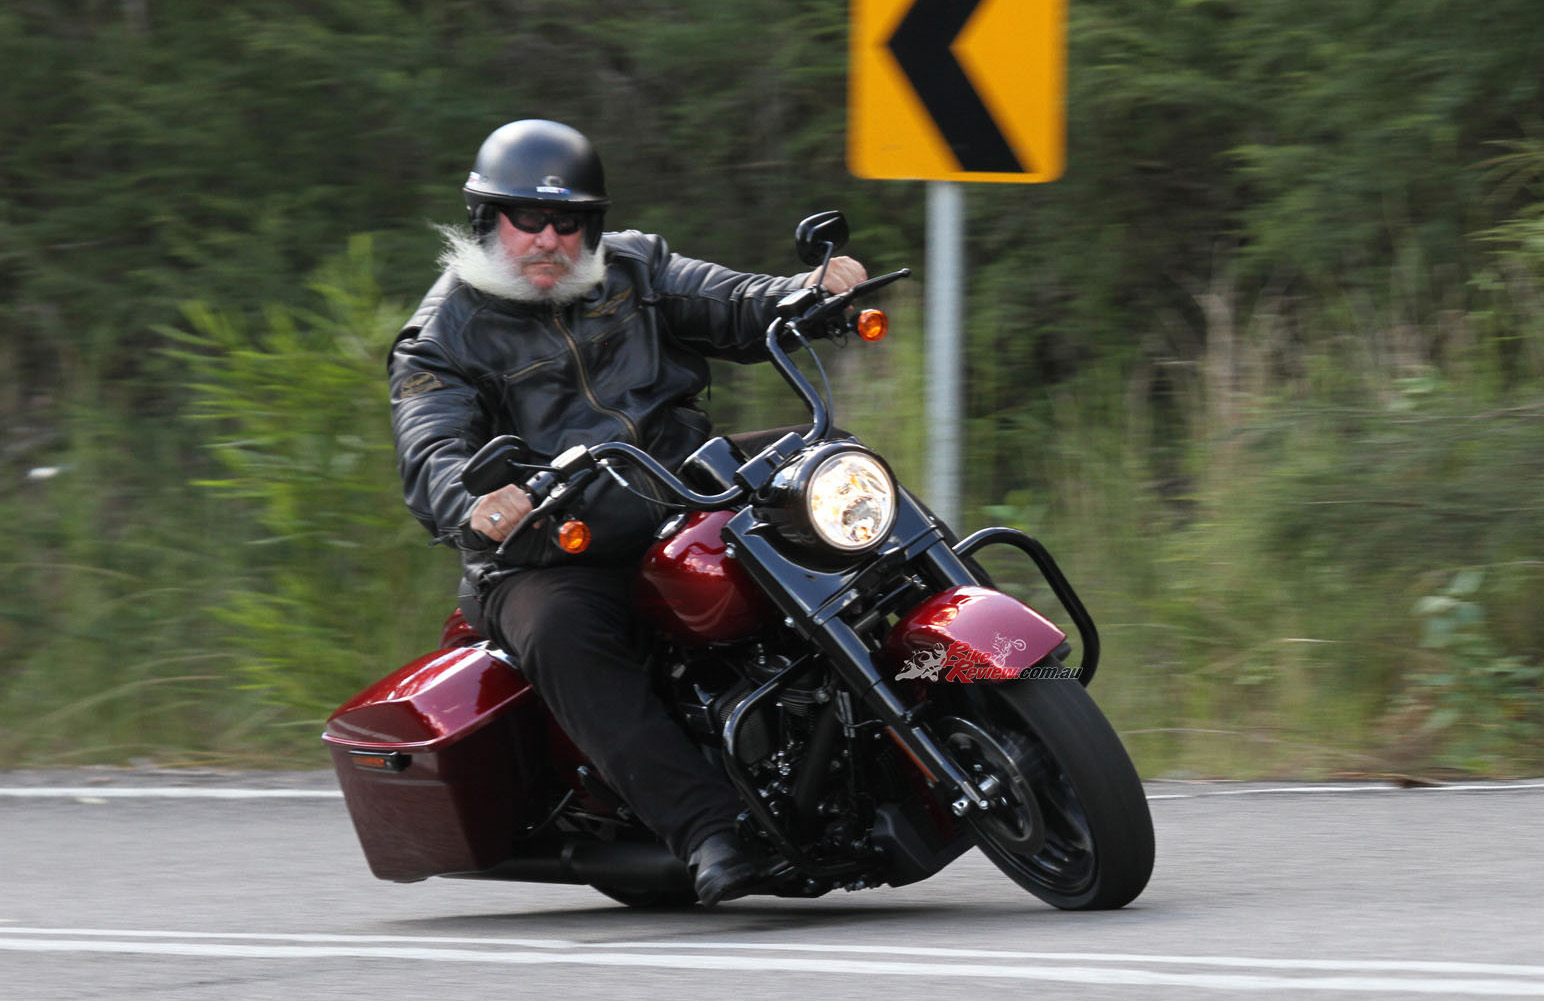 2020 Road King Special Motorcycle Harley Davidson Deutschland